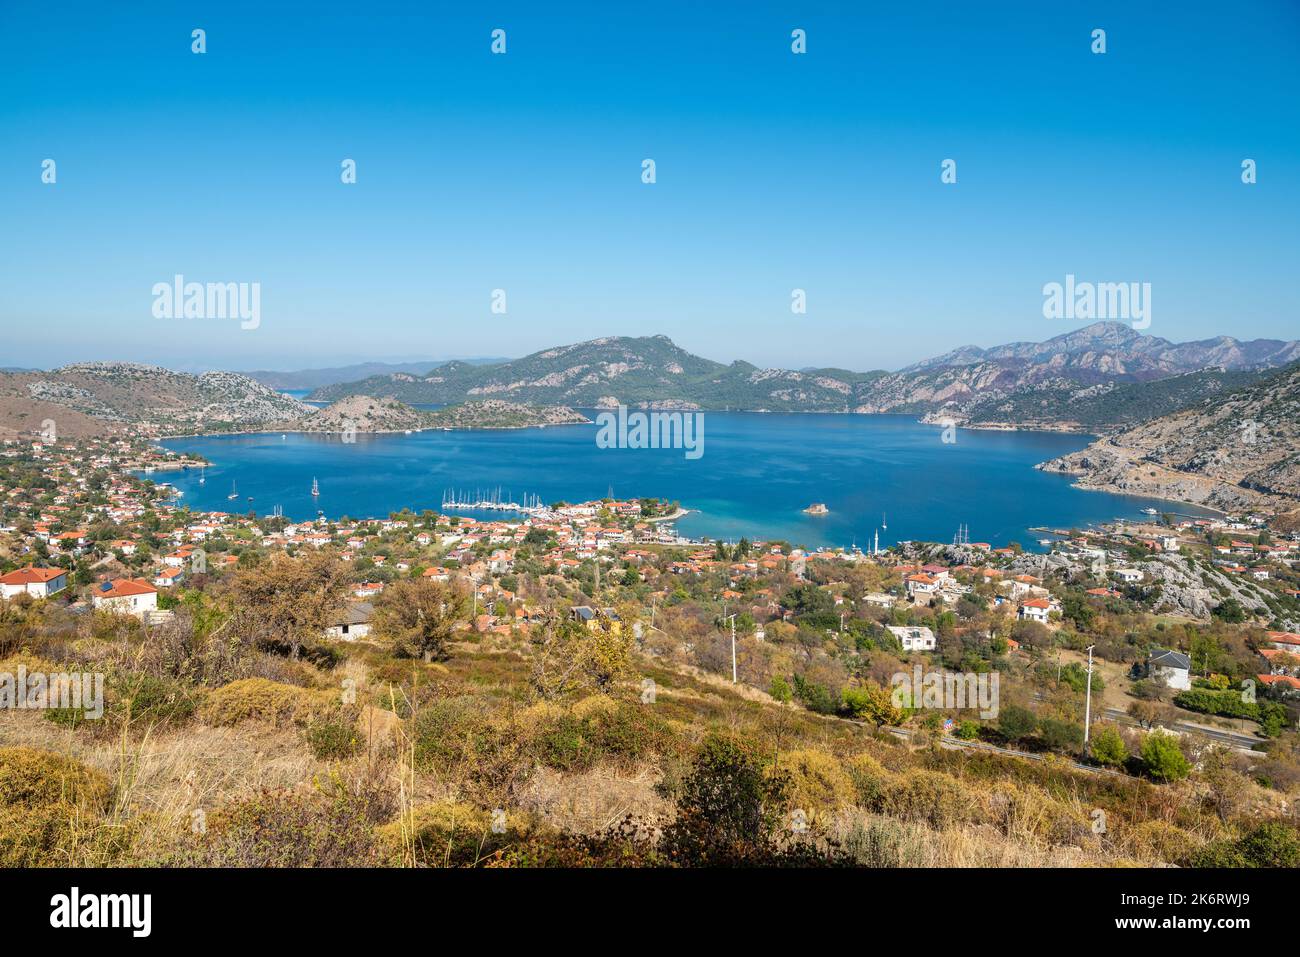 View over Selimiye village near Marmaris resort town on the Bozburun Peninsula in Mugla province of Turkey. View in October 2021. Stock Photo